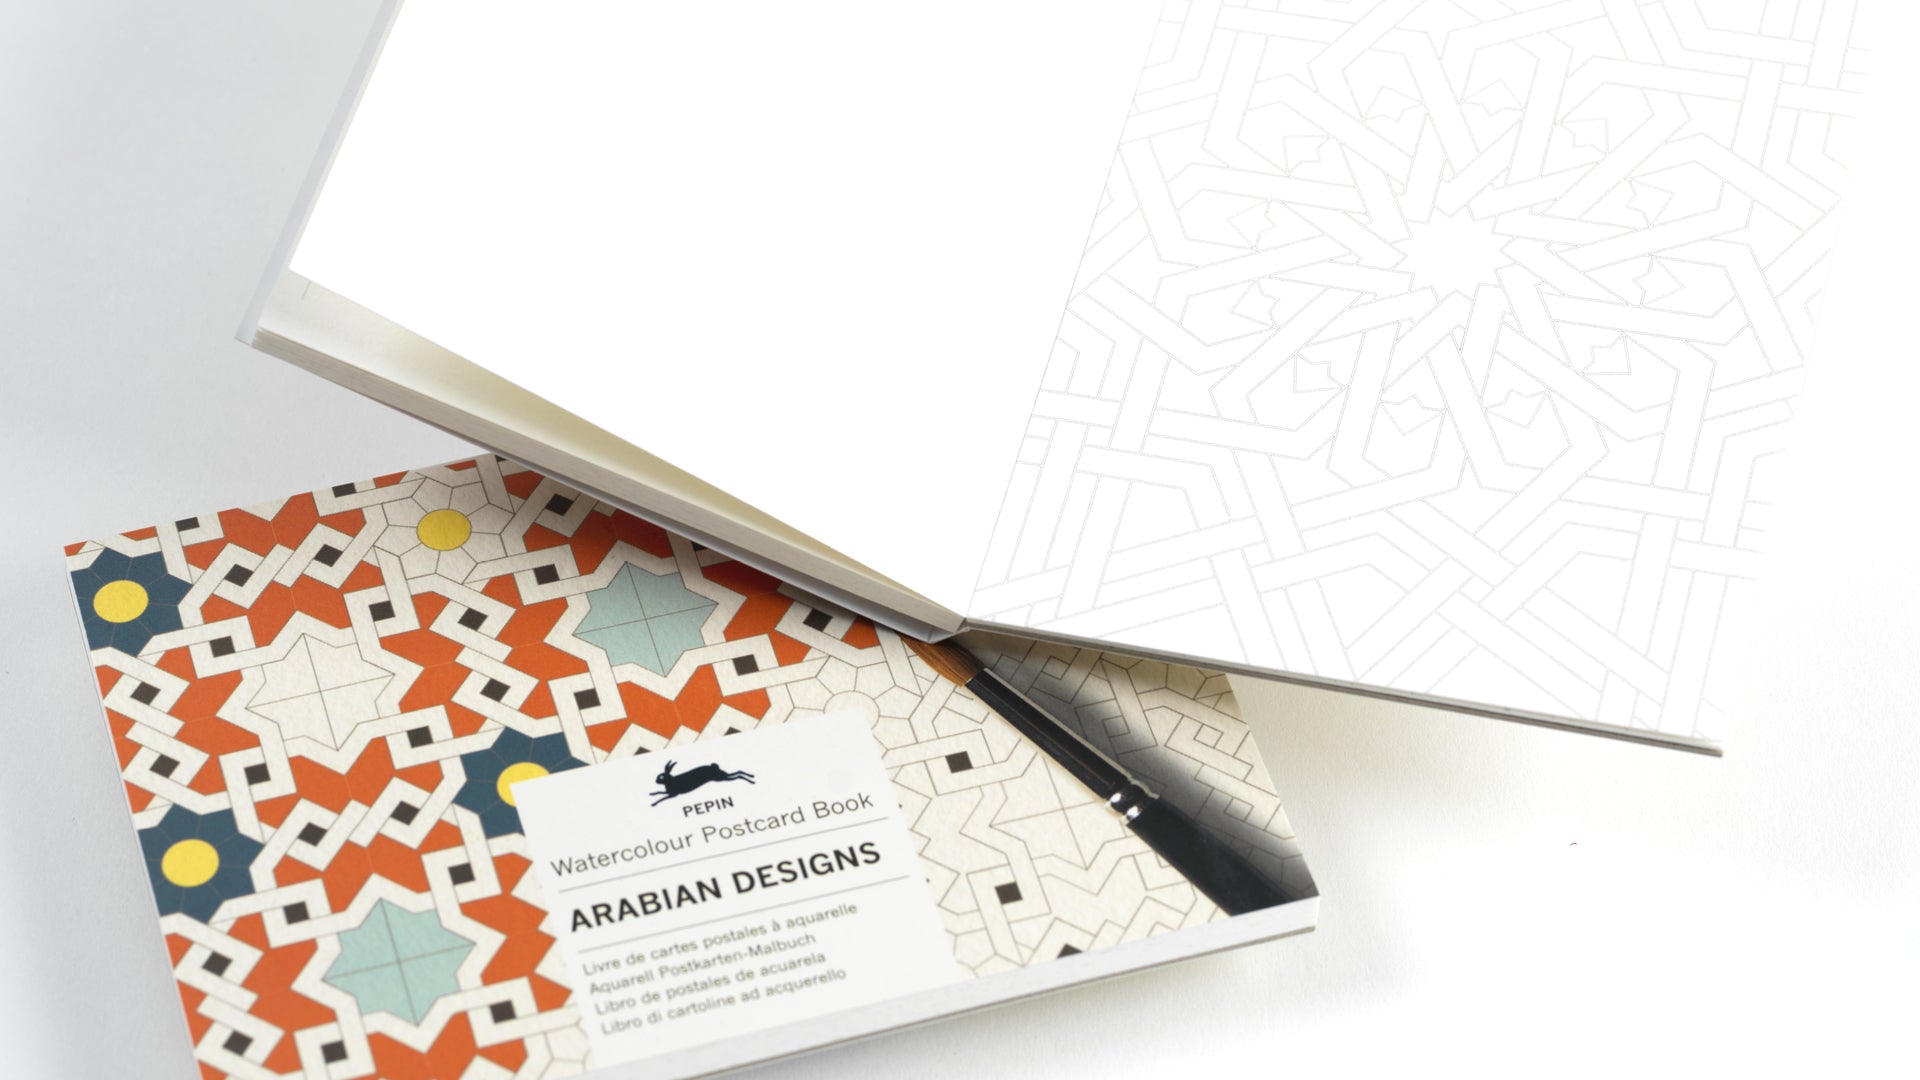 Watercolour Postcard Book - Arabian Designs